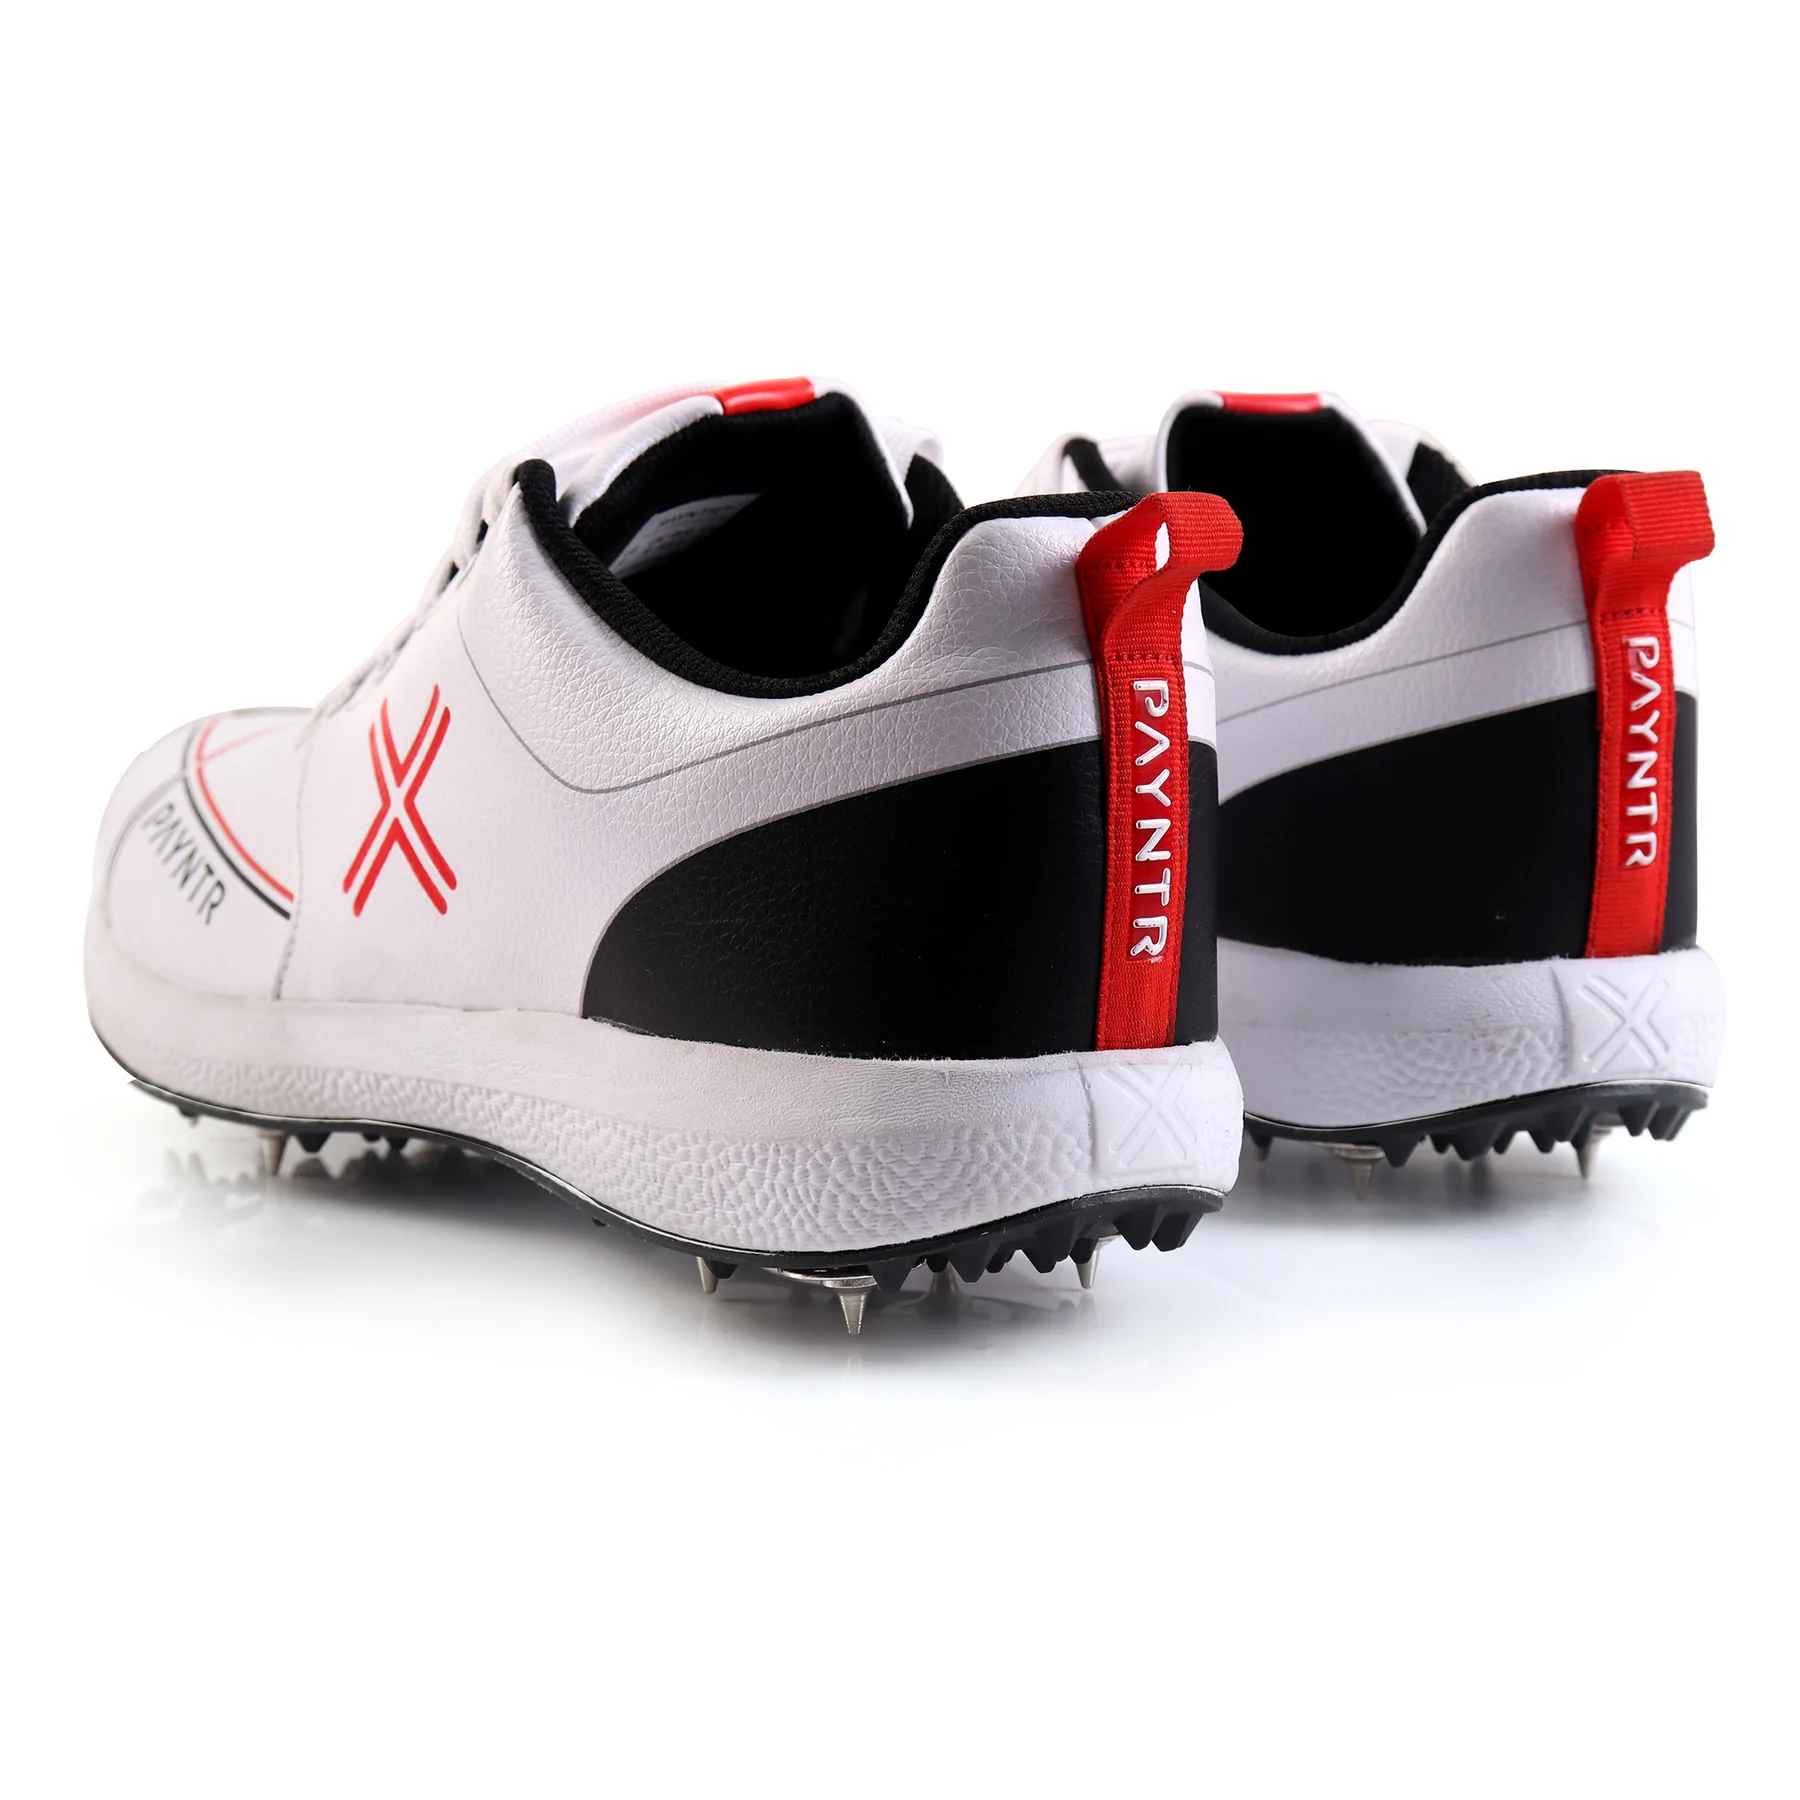 PAYNTR X SPIKES Cricket Shoes – White/Orange/Black